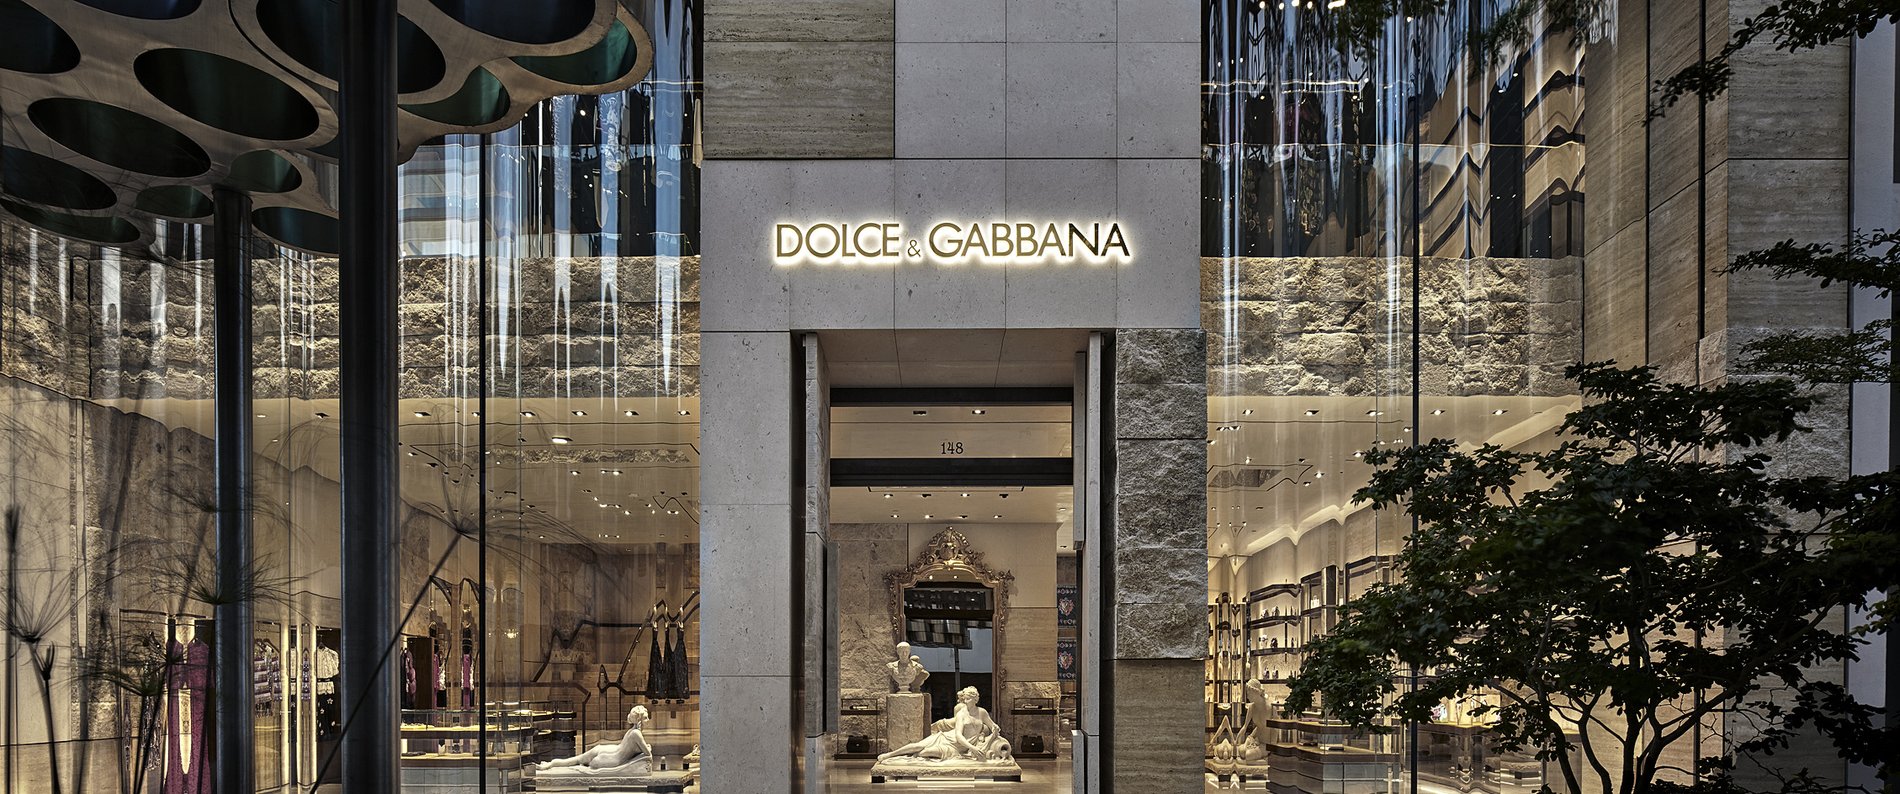 Arriba 65+ imagen dolce gabbana boutique